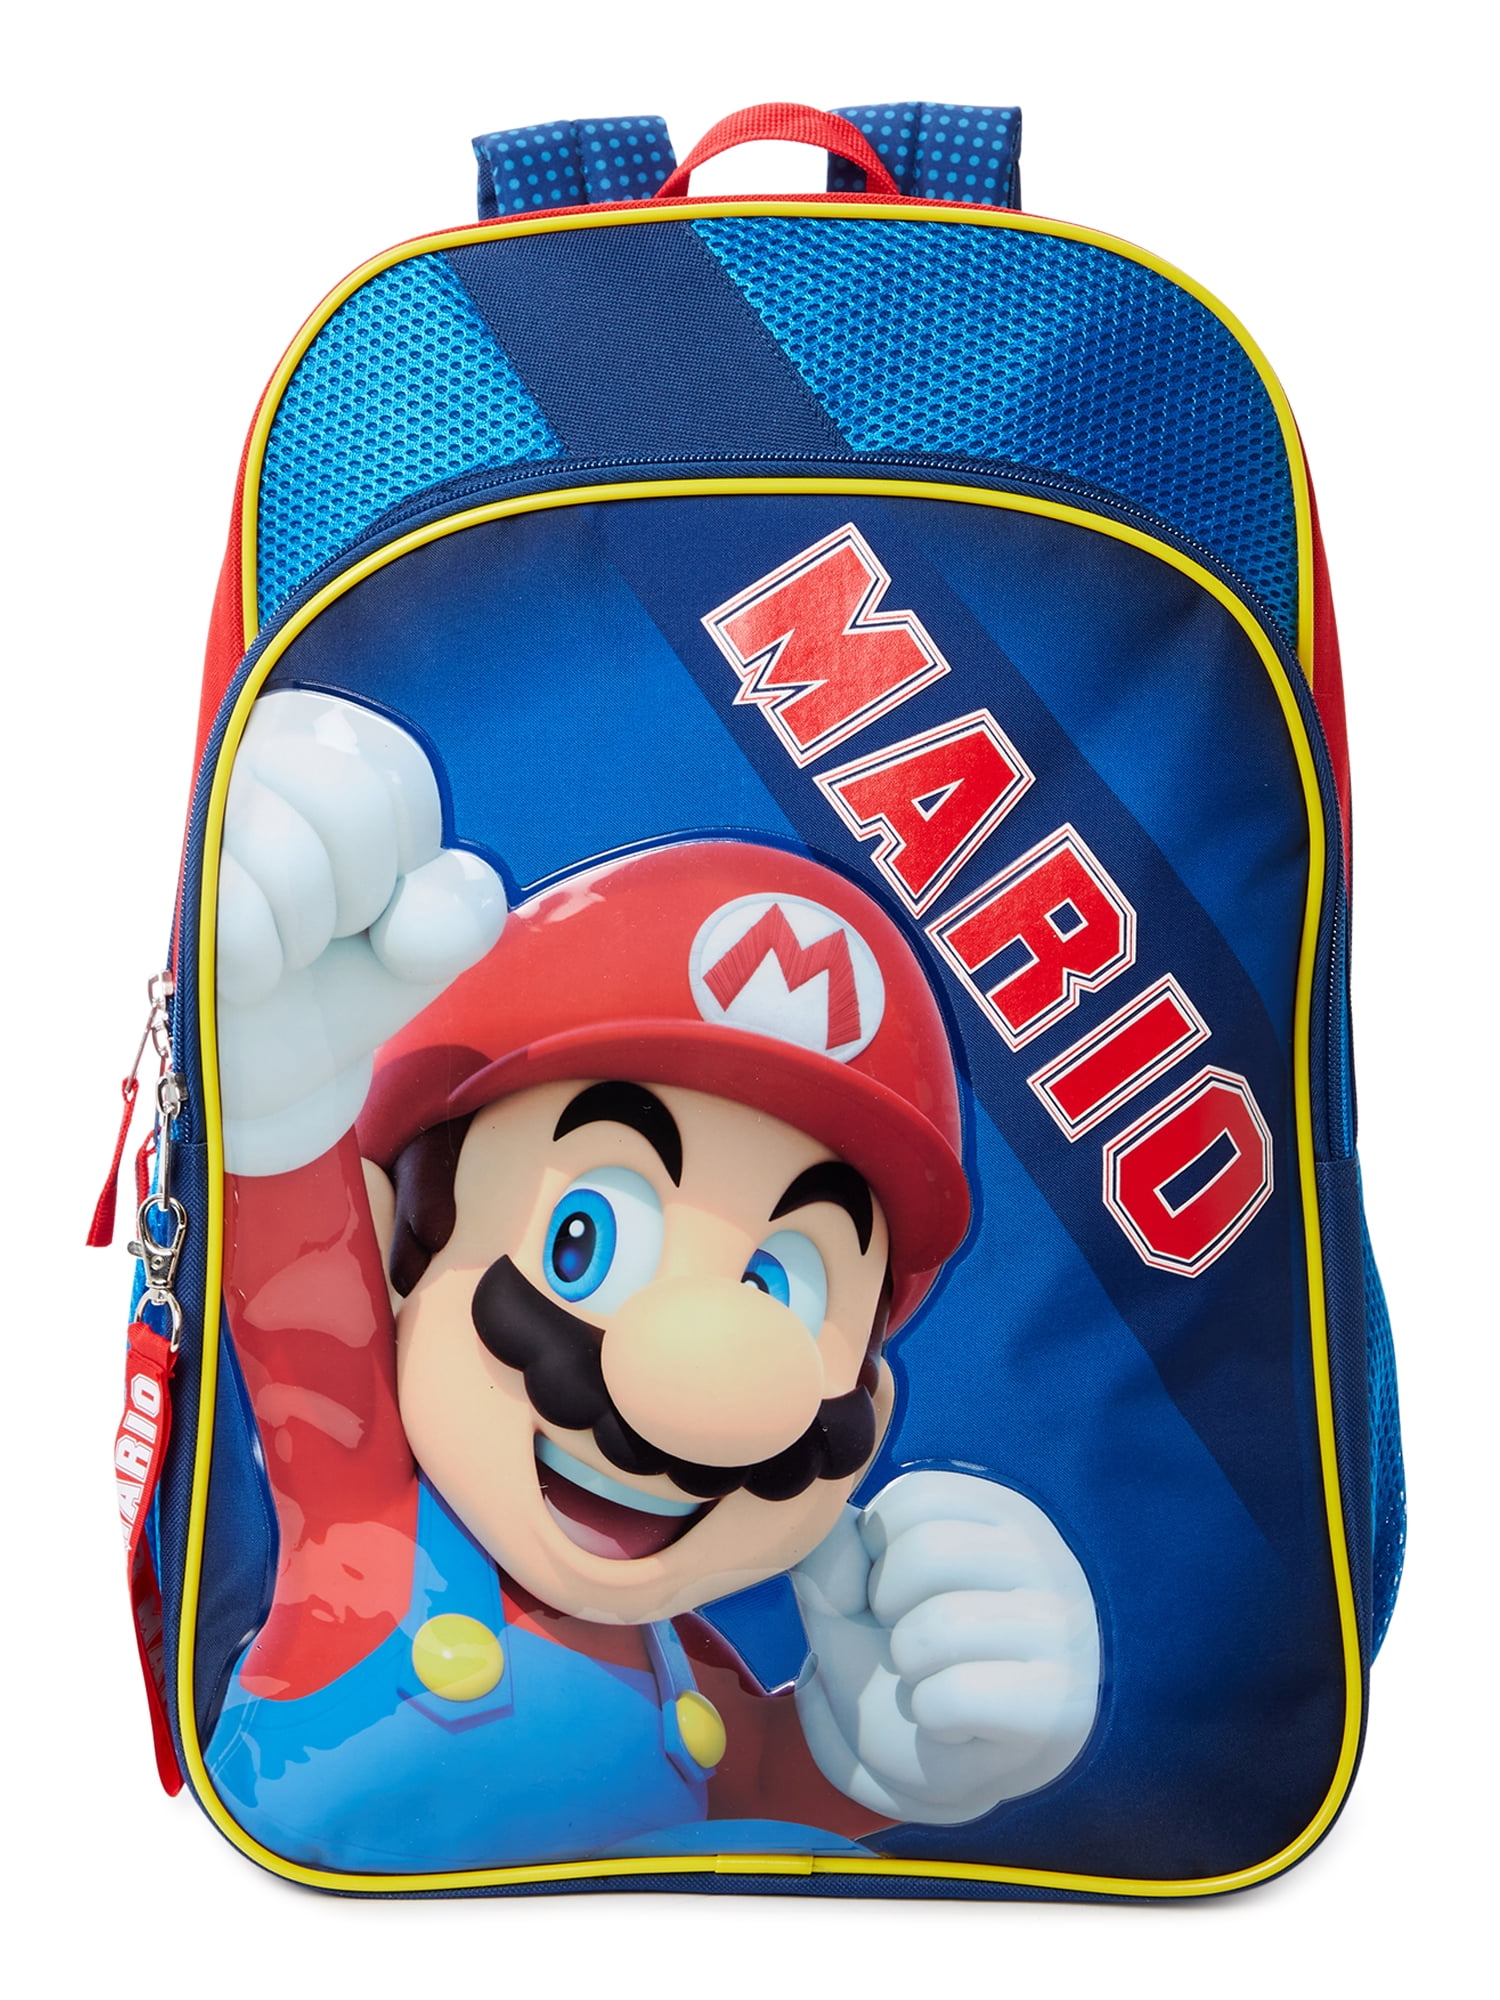 Aproximación A rayas compensar Nintendo Super Mario Bros. Kids' Backpack Blue Red - Walmart.com